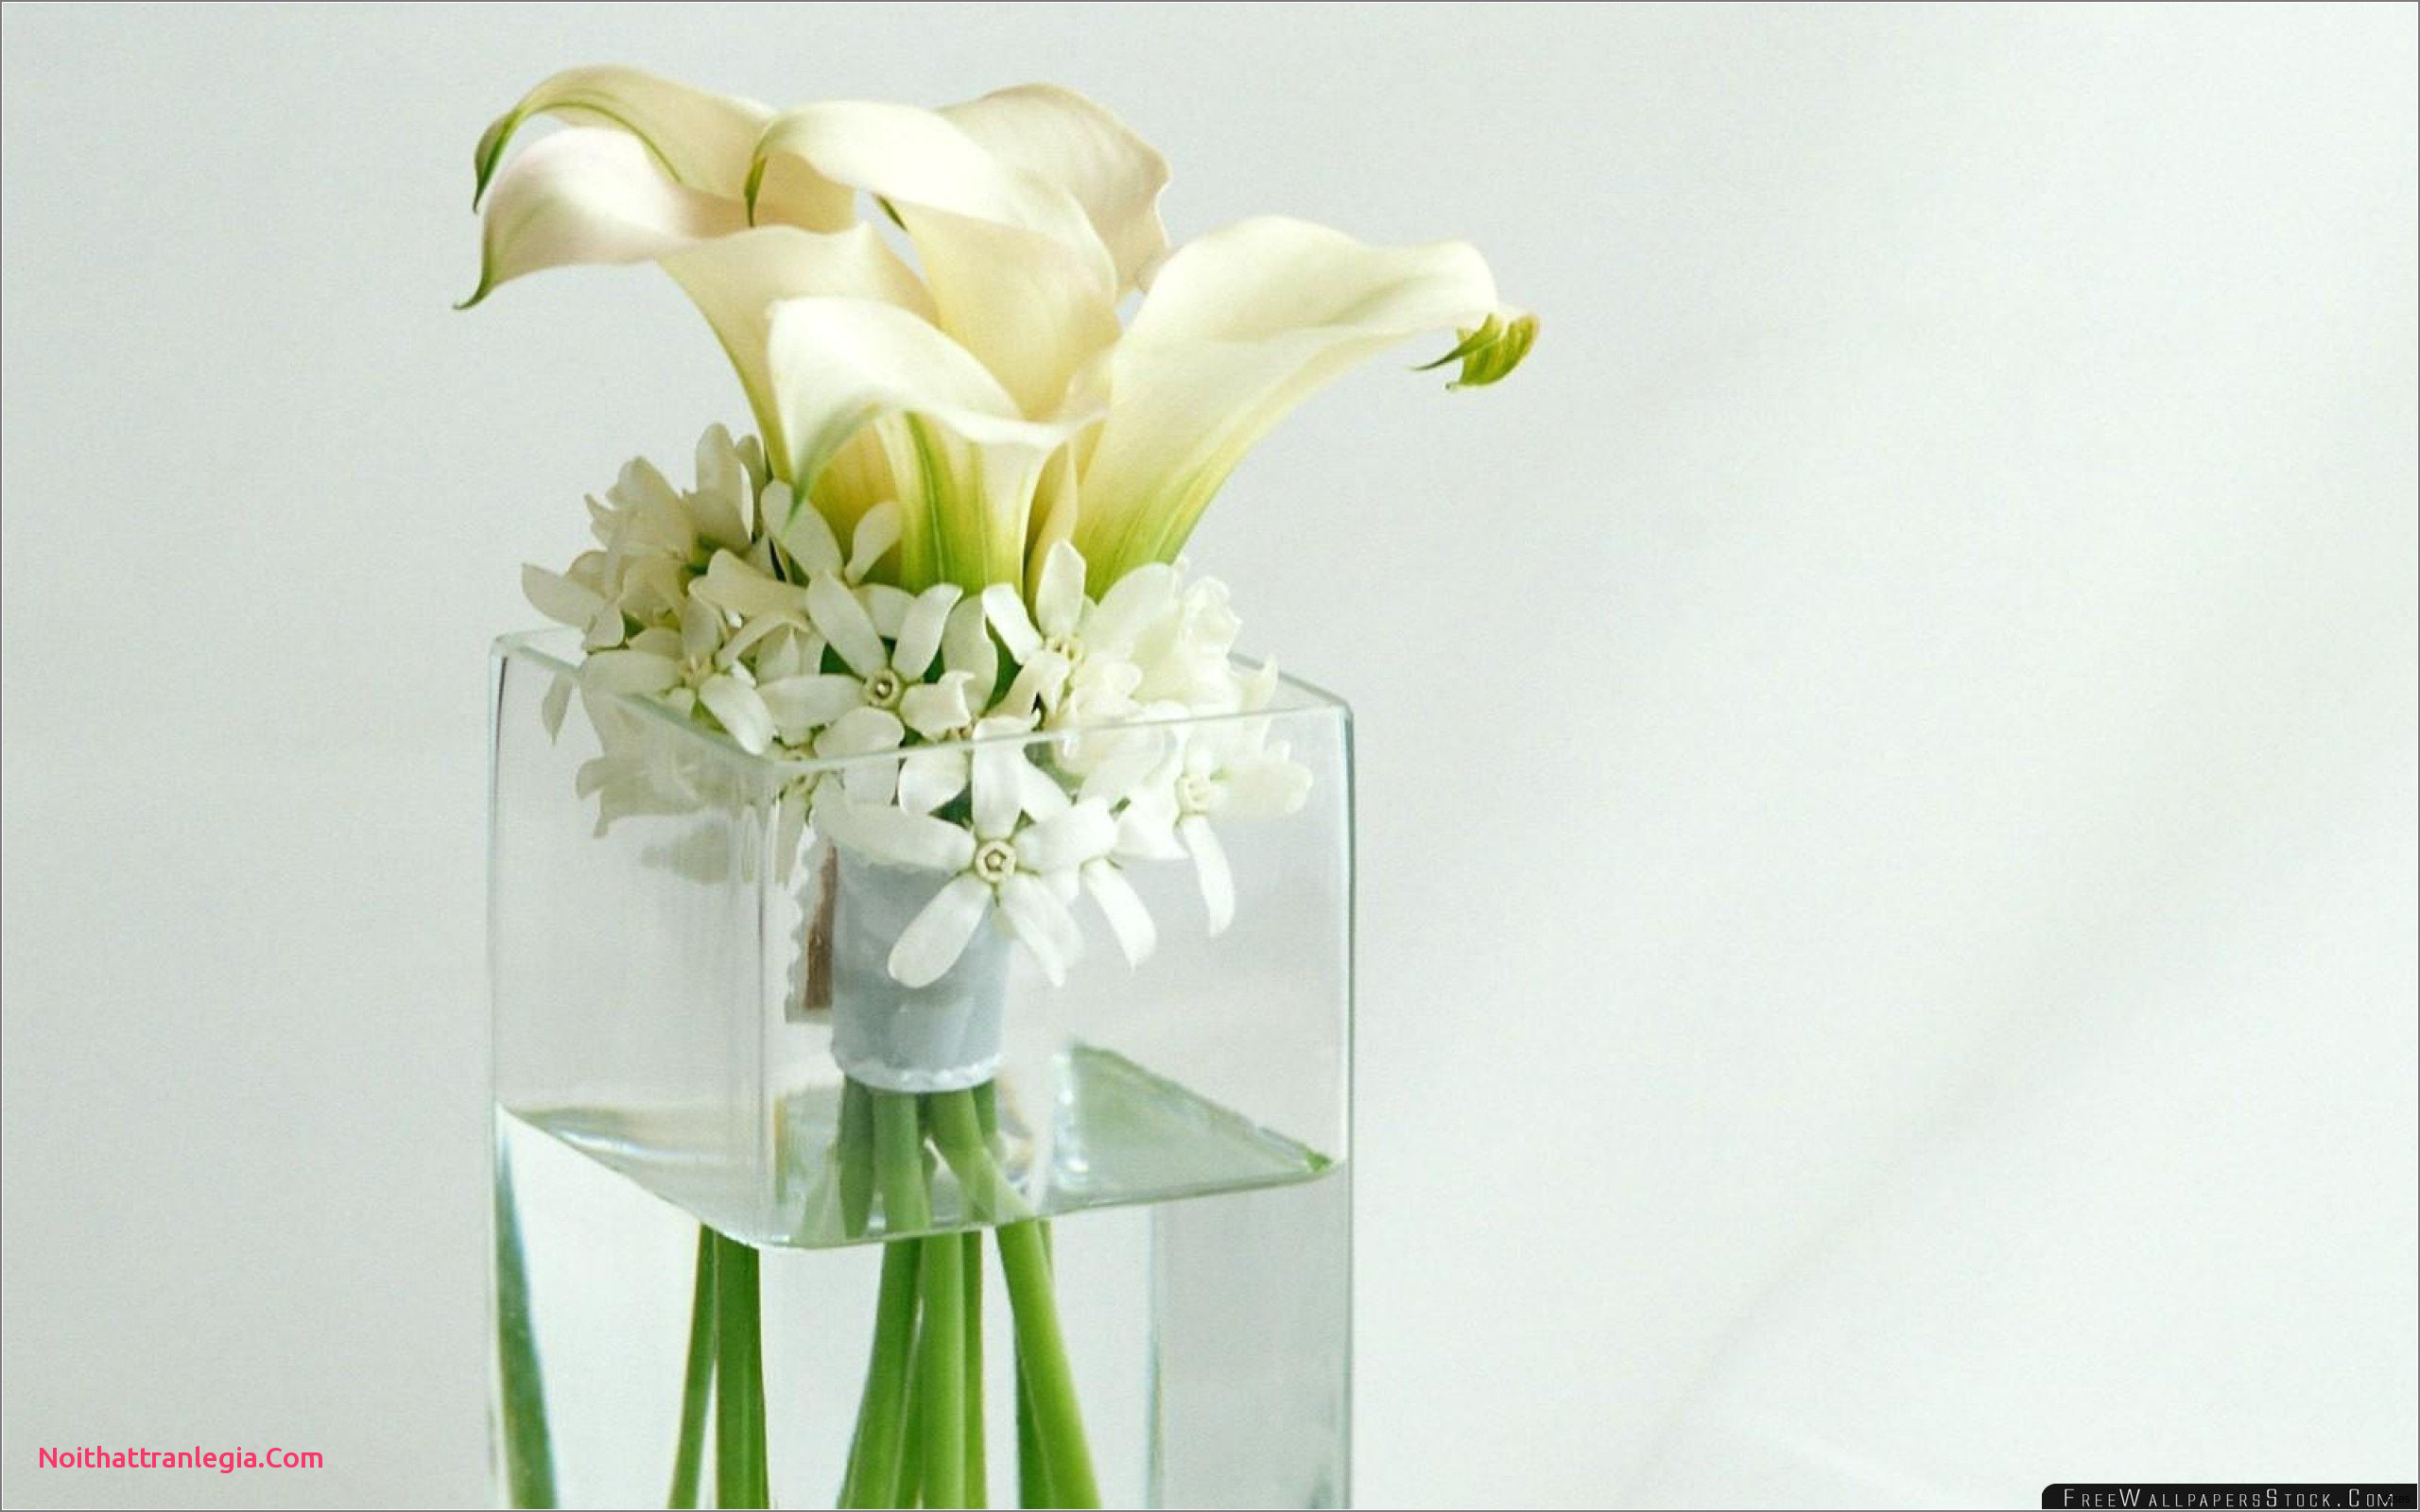 vase gift ideas of 20 wedding vases noithattranlegia vases design with wedding petals amazing tall vase centerpiece ideas vases flowers in water 0d artificial 2560 87